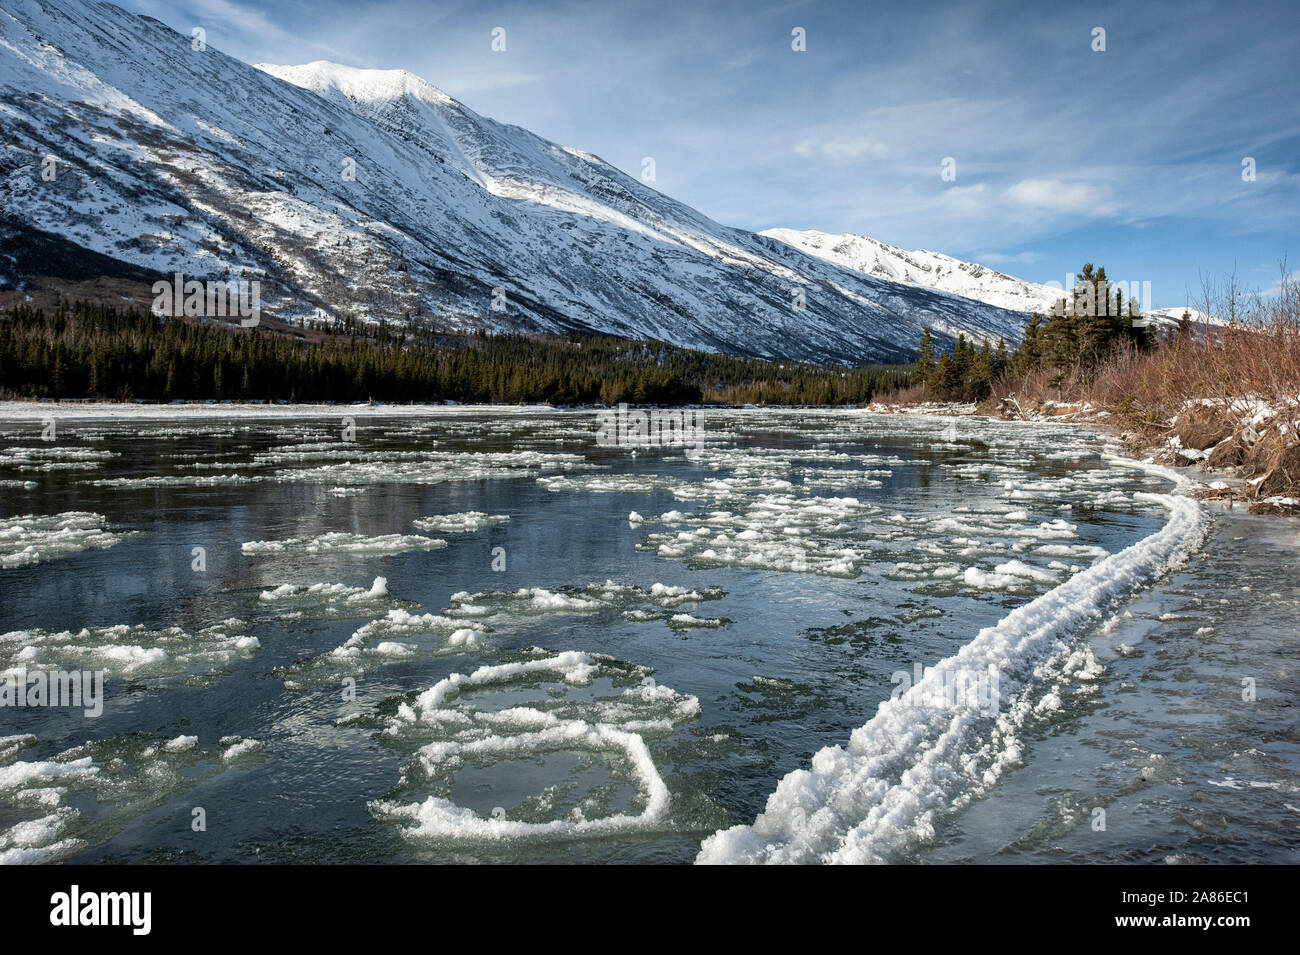 North America; United States; Alaska; Denali National Park; Alaska Range Mountains; Winter; Nenana River Freeze-Up Stock Photo